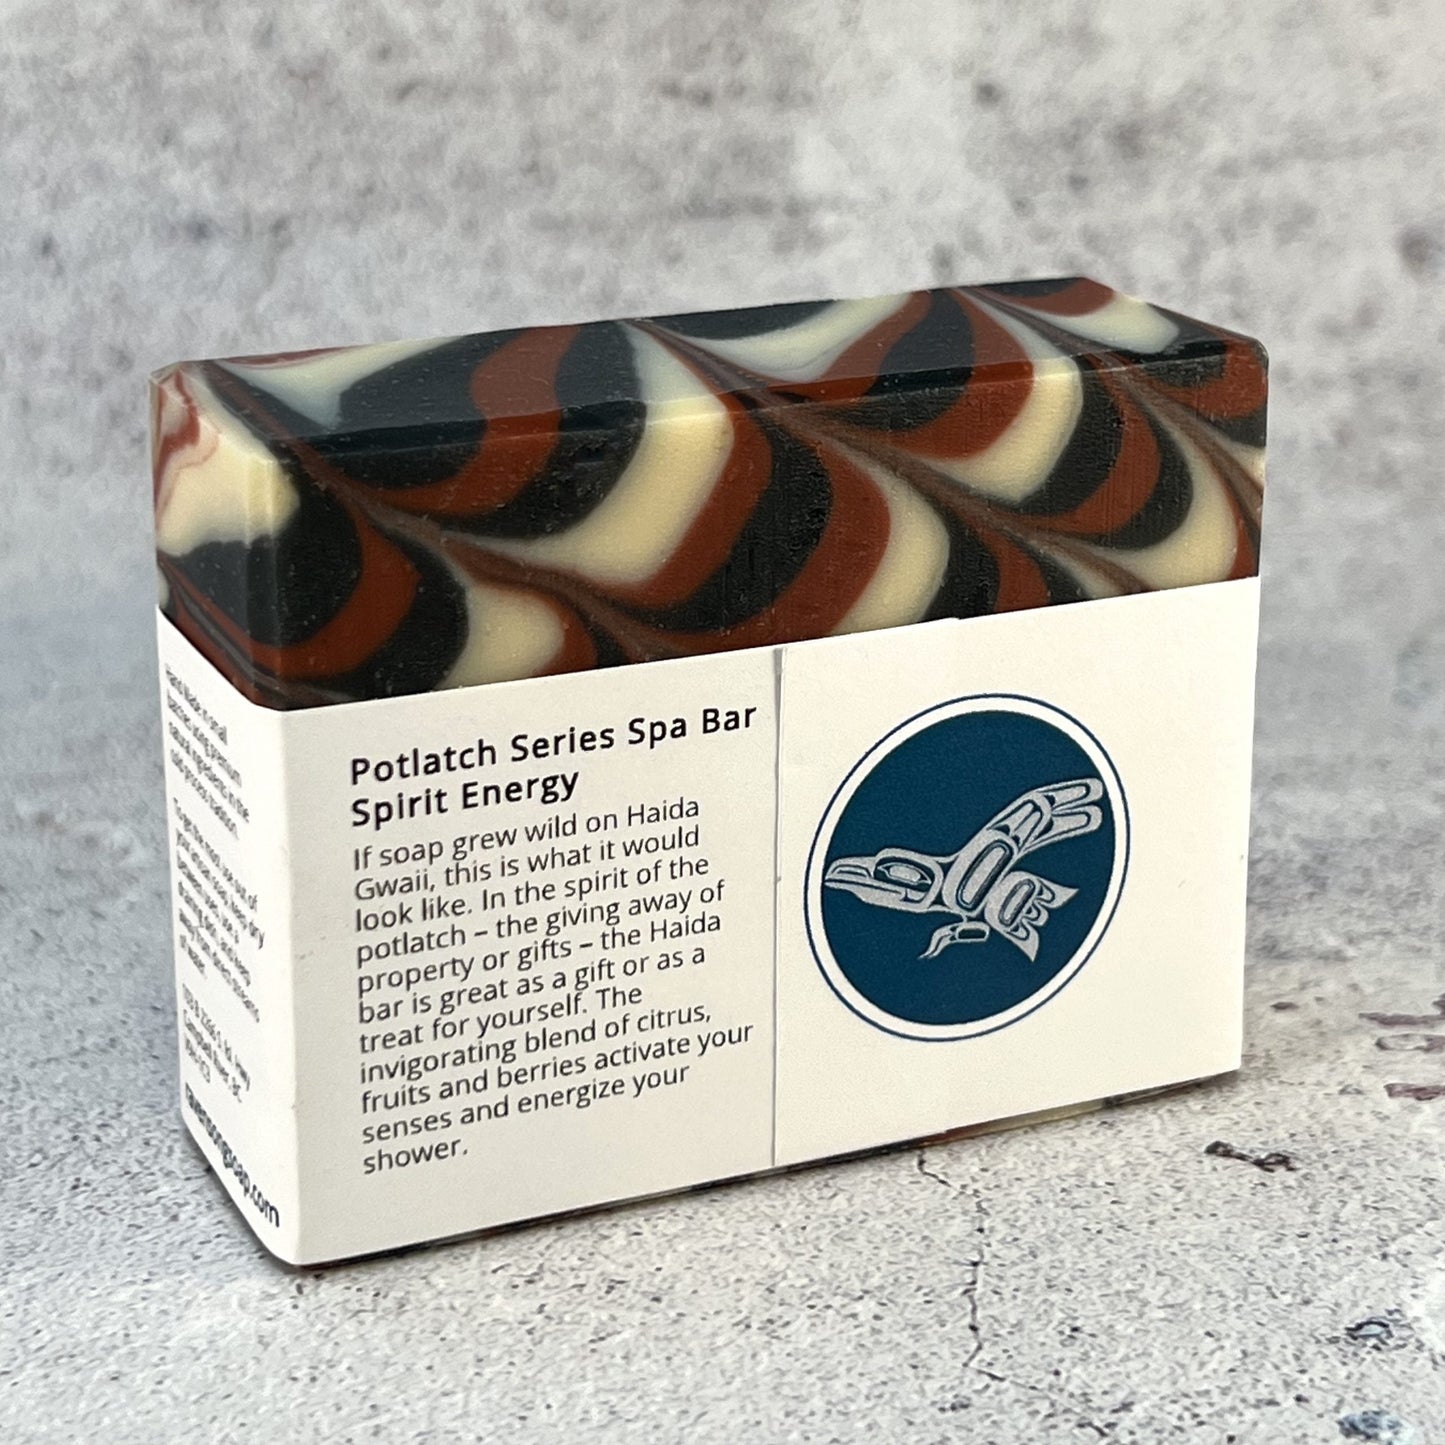 RavenSong Potlatch Series Artisan Soap - Spirit Energy